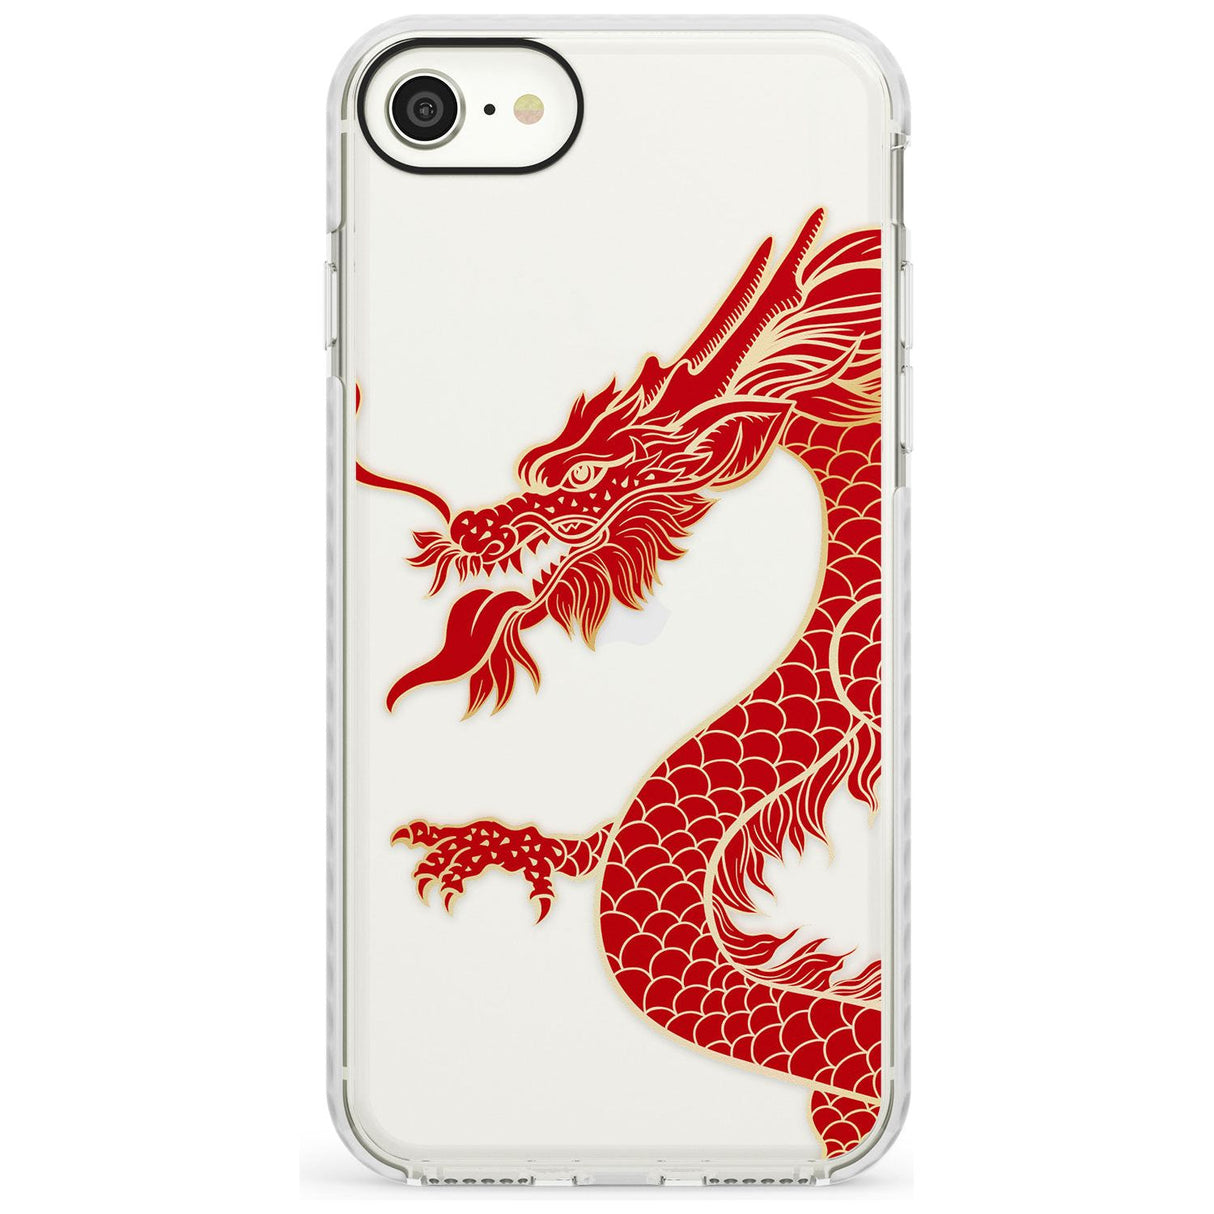 Large Black Dragon Impact Phone Case for iPhone SE 8 7 Plus